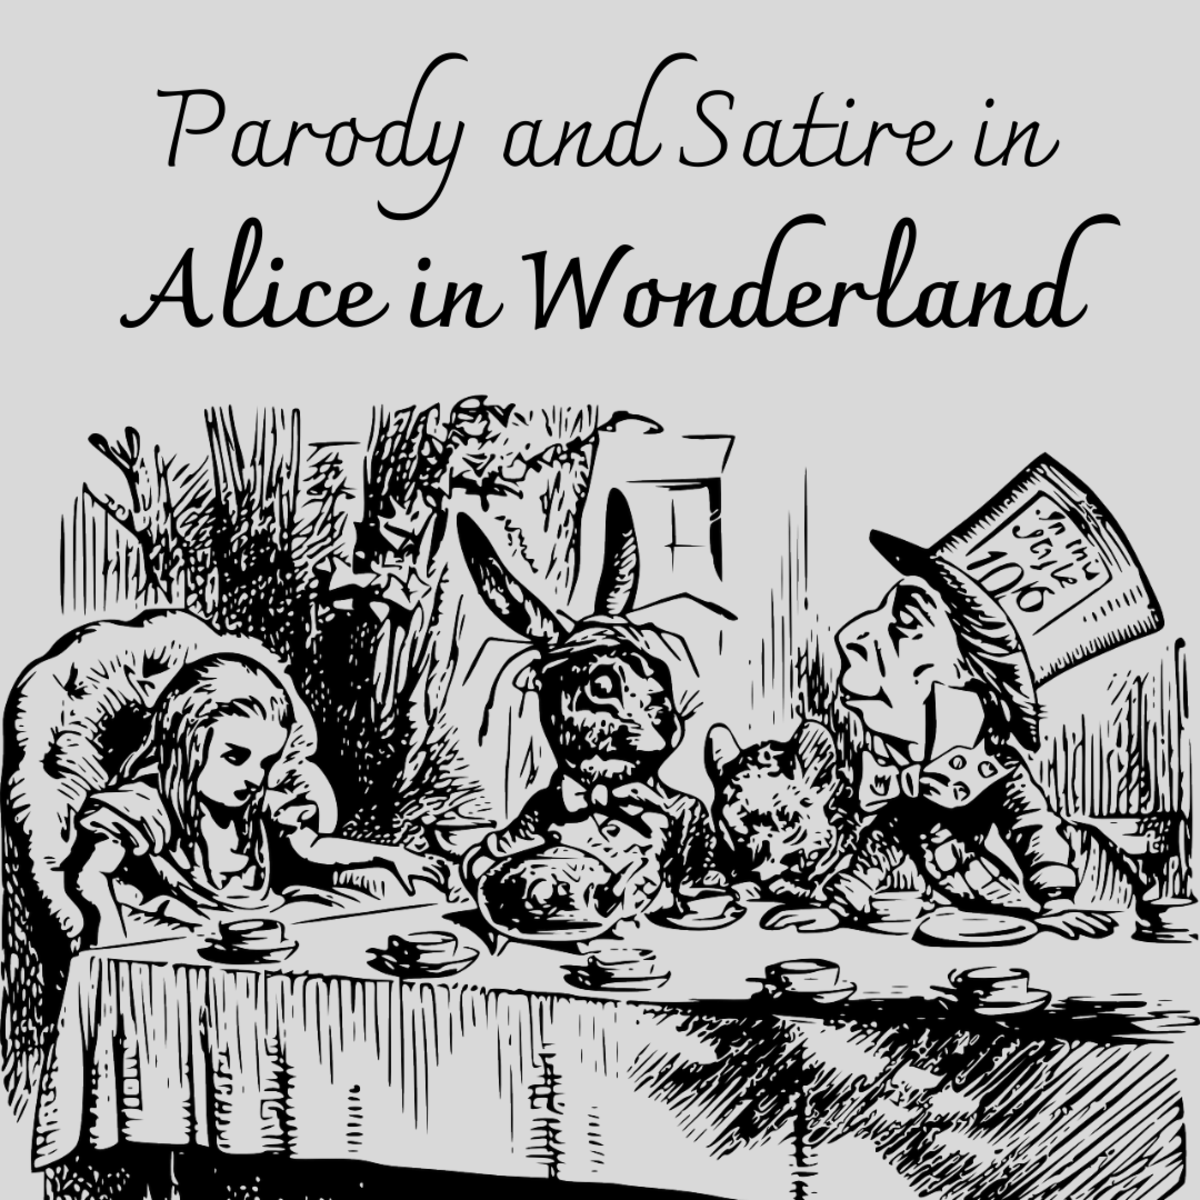 The Use of Parody in 'Alice's Adventures in Wonderland'